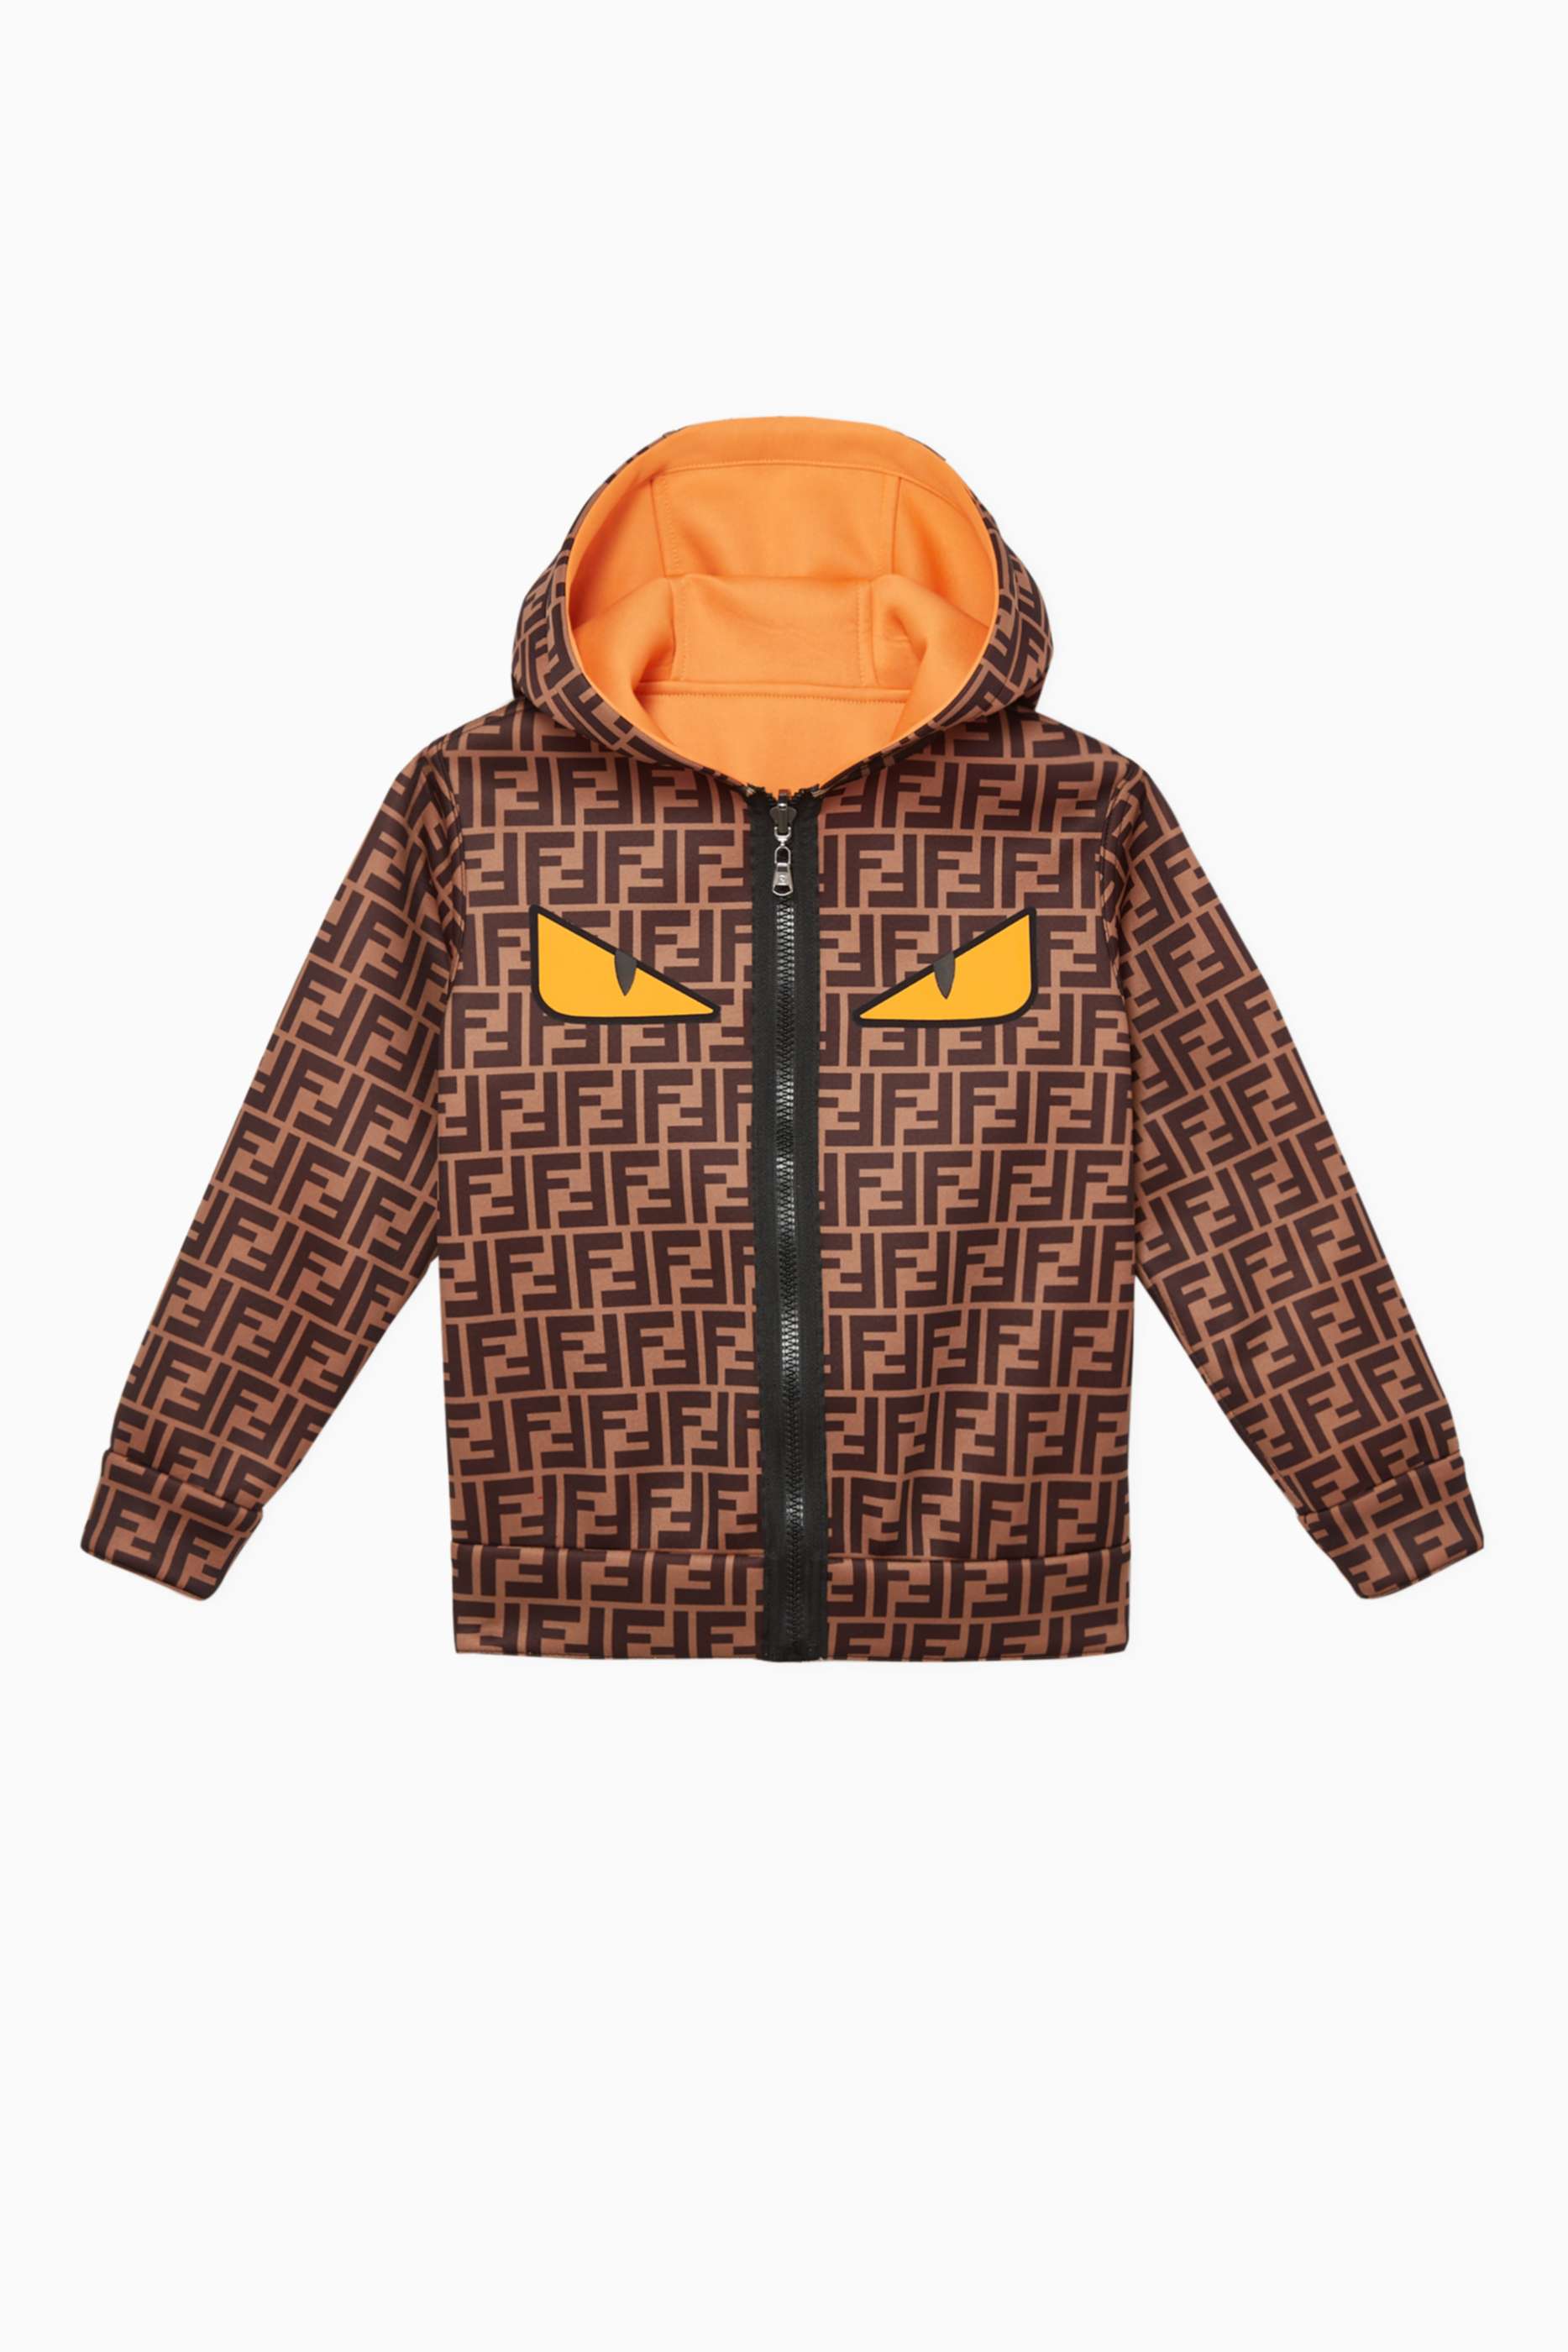 orange fendi monster jacket